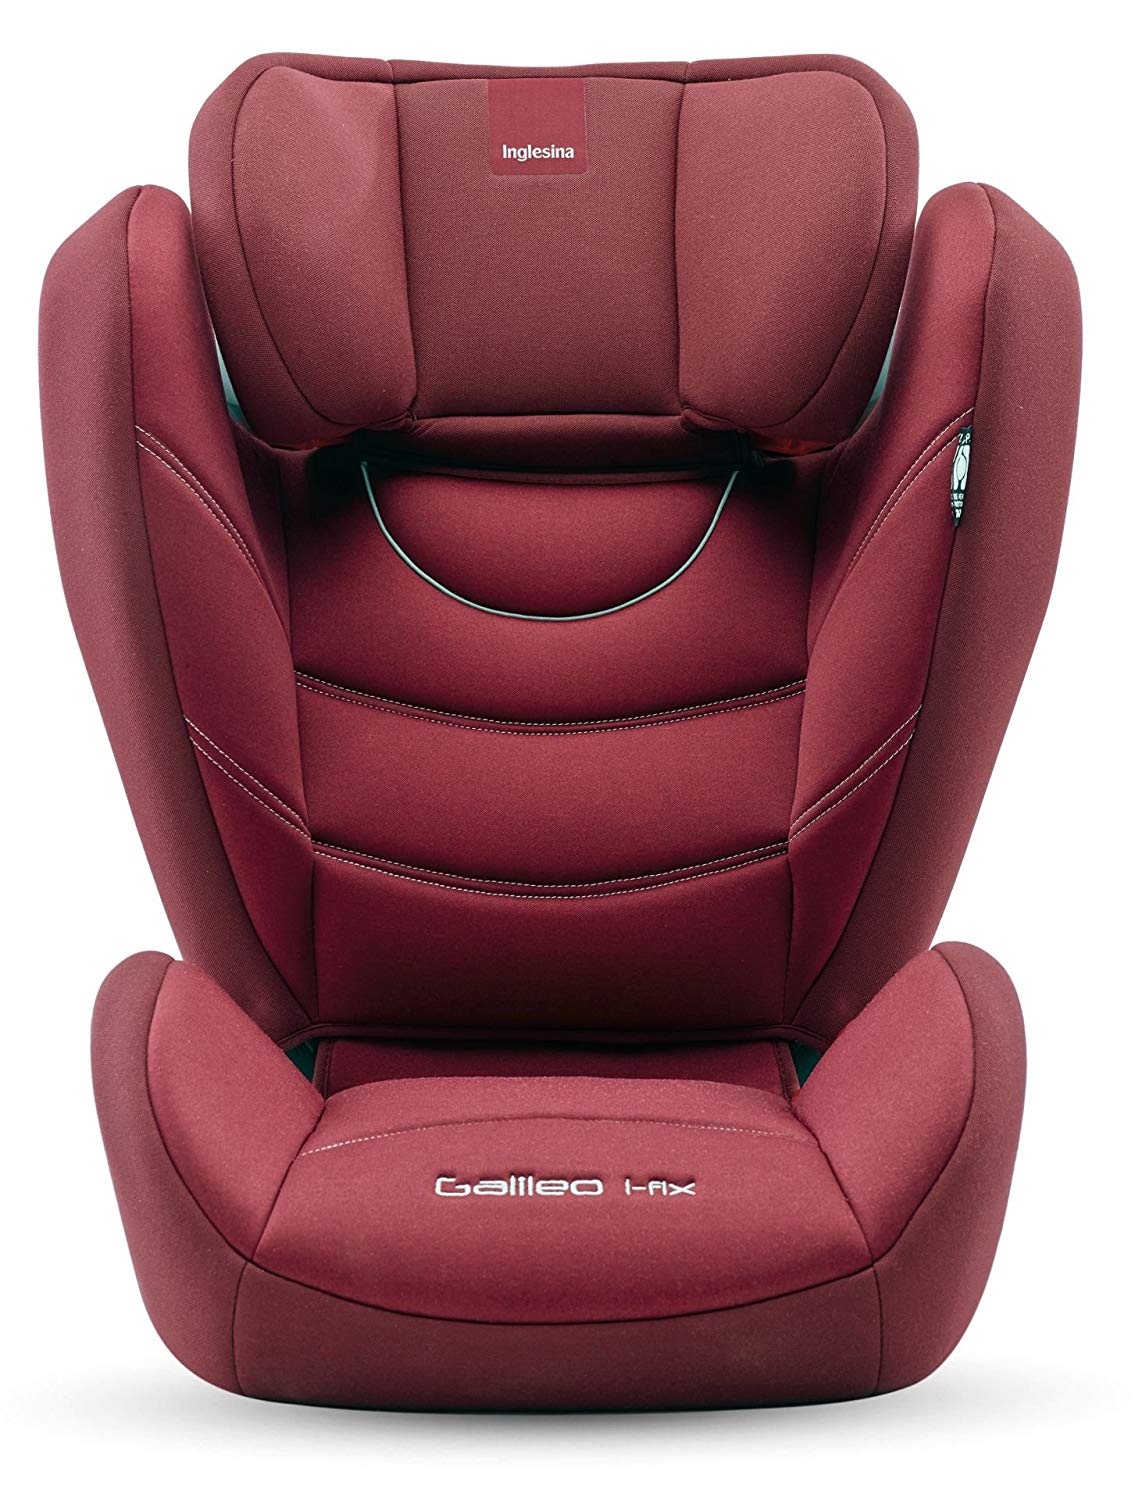 Inglesina Galileo I Fix Car Seat Gr. 2/3, Red